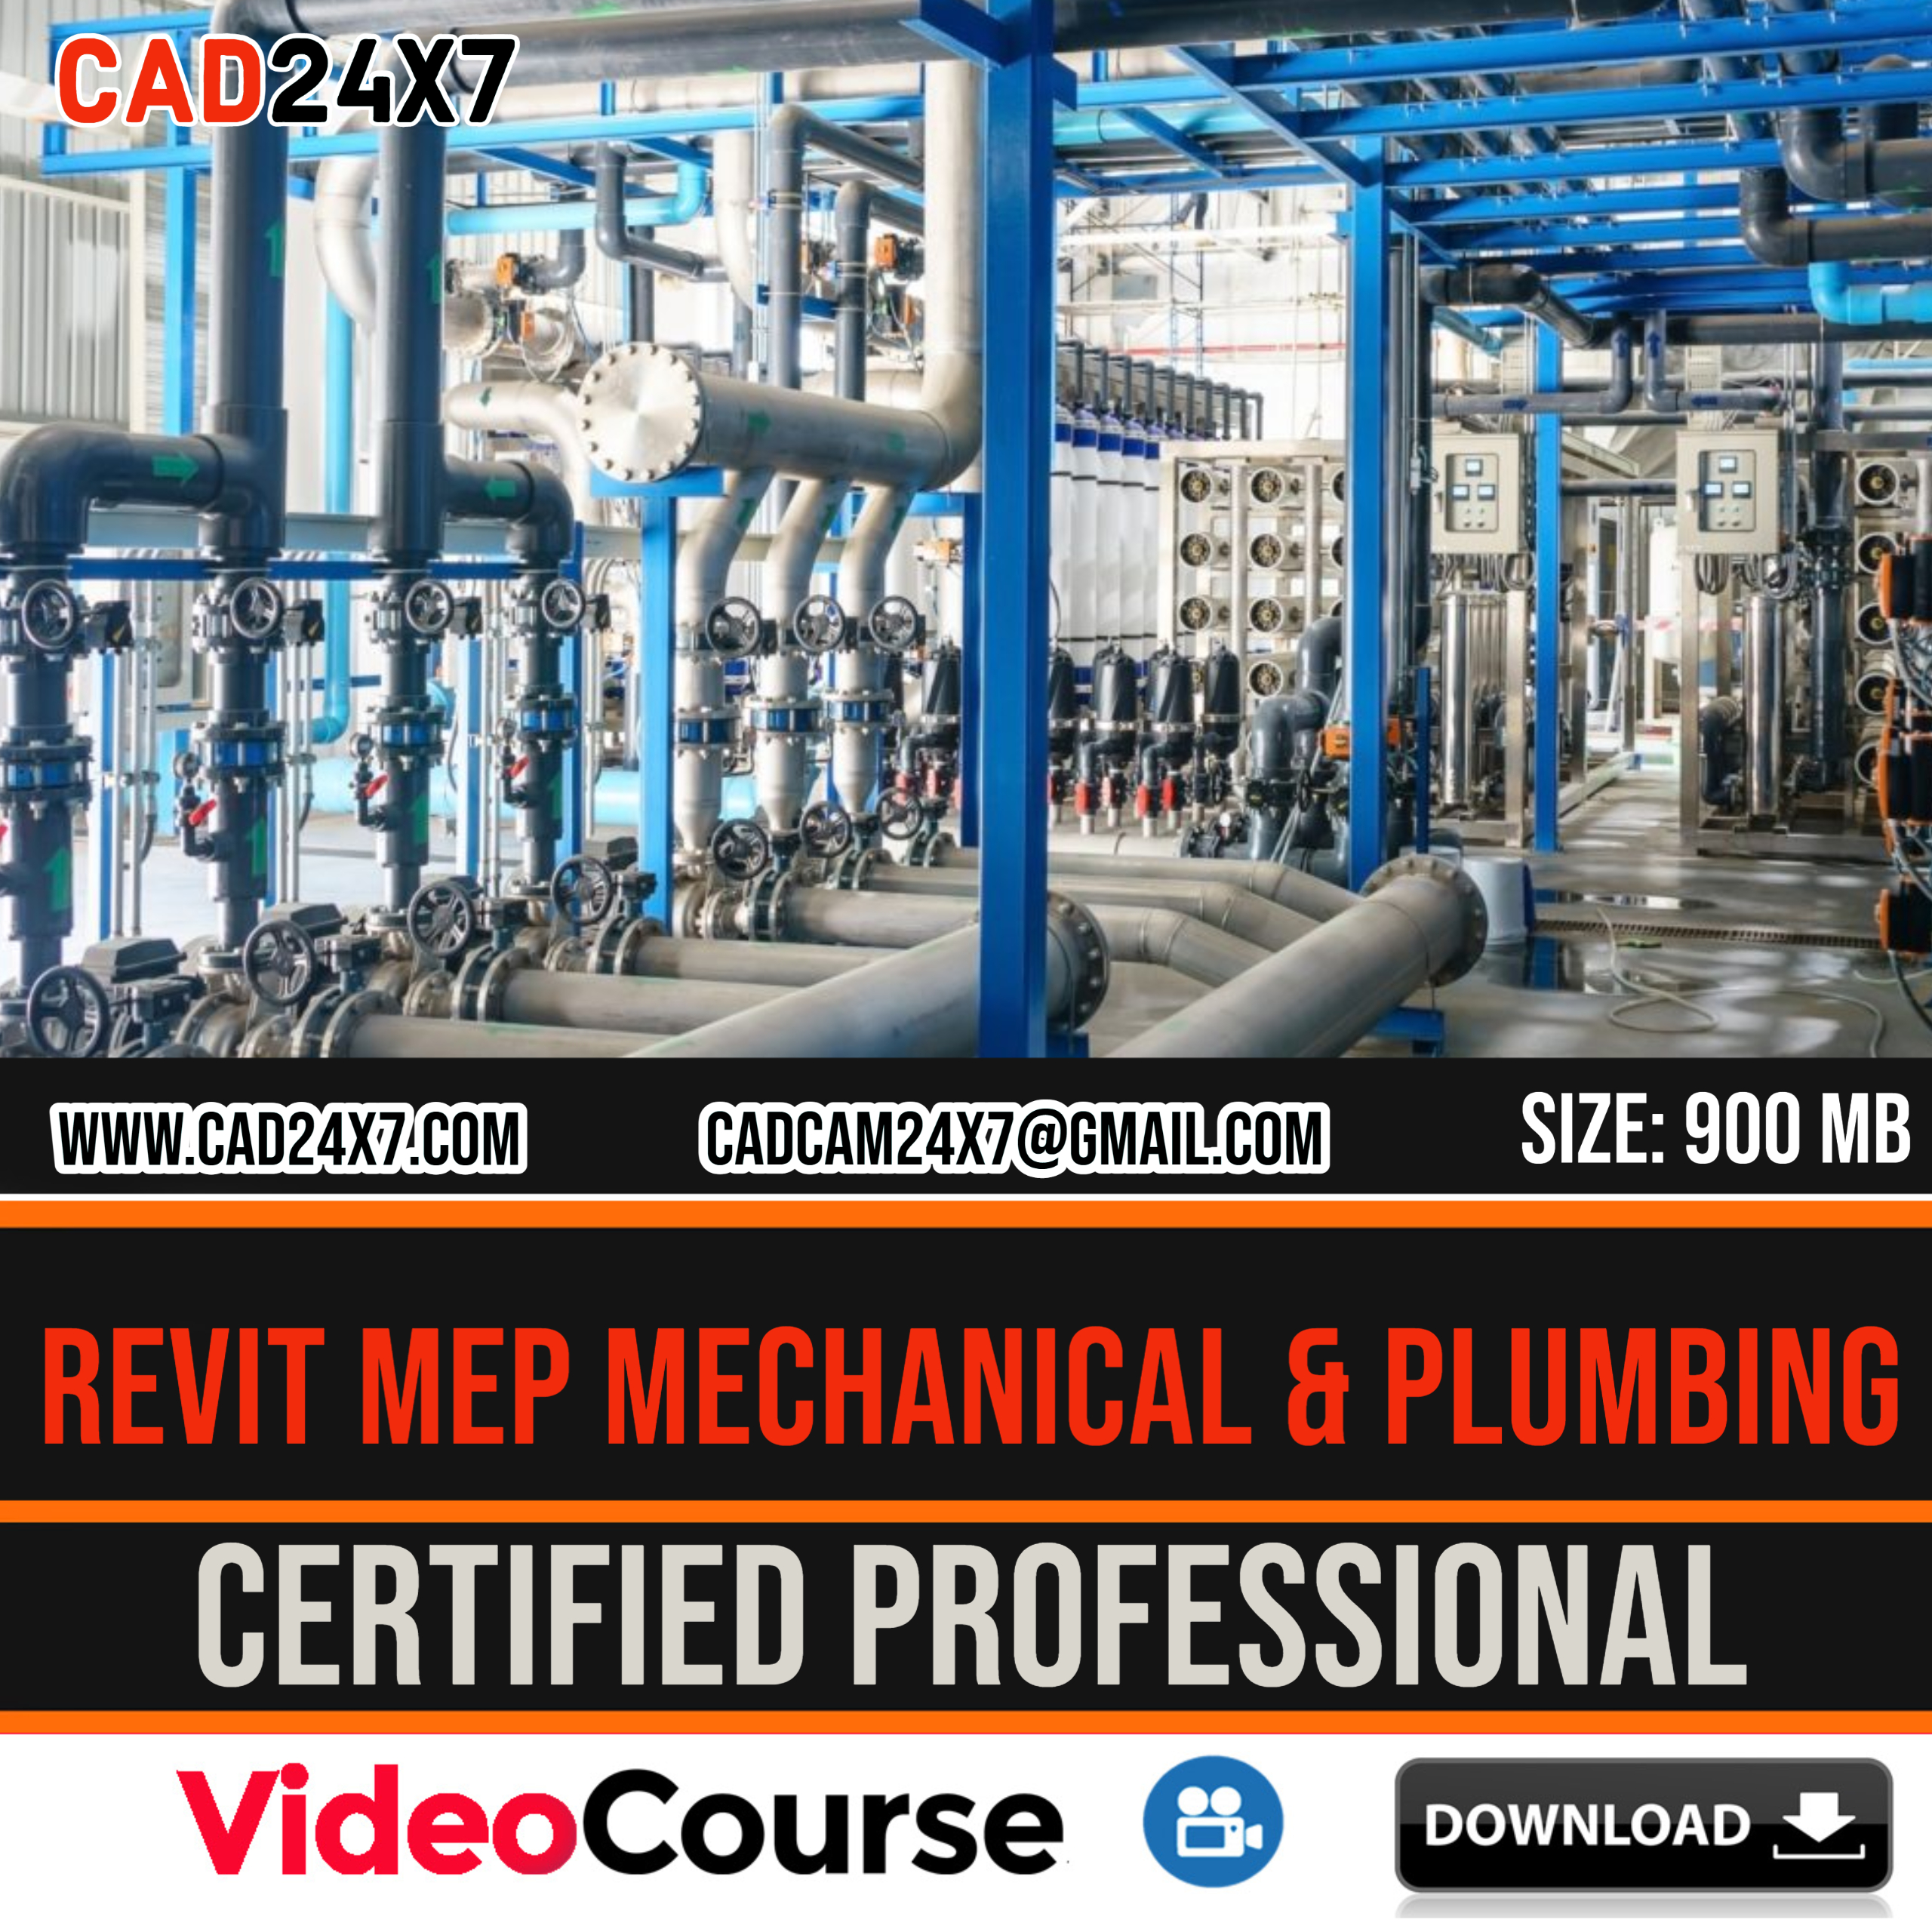 Revit MEP Mechanical & Plumbing Certified Professional